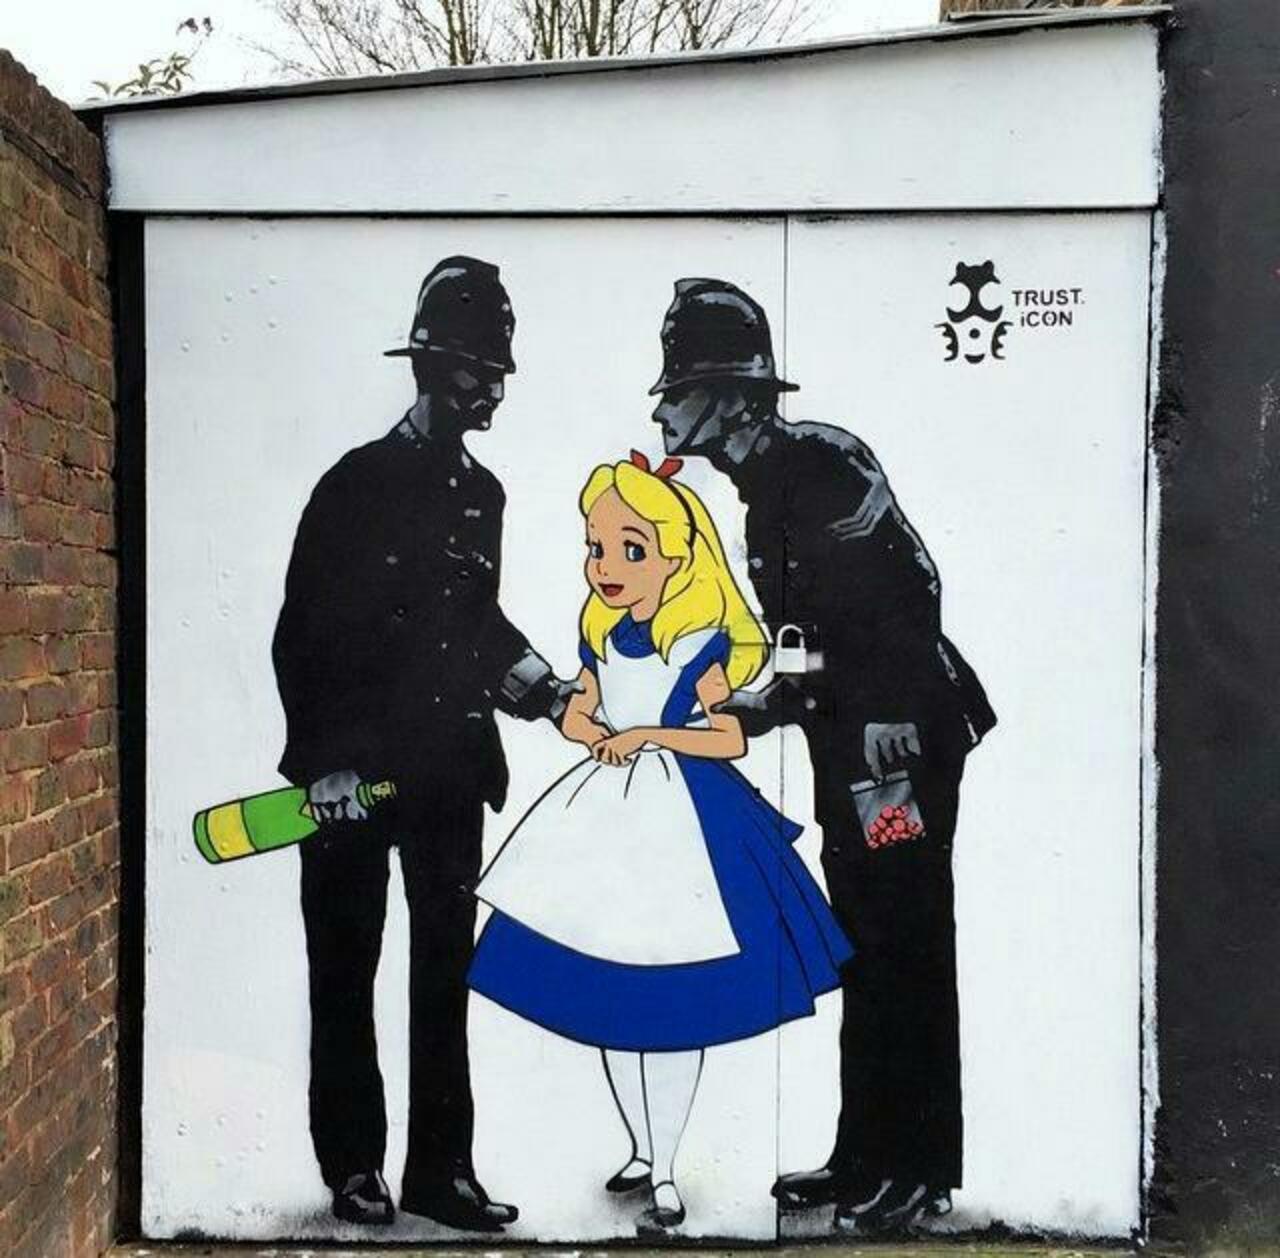 RT @QueGraffiti: Nuevo street art de iCON en Camden, Londres, UK 

#art #arte #graffiti #streetart http://t.co/ZFN1Q7I6ED